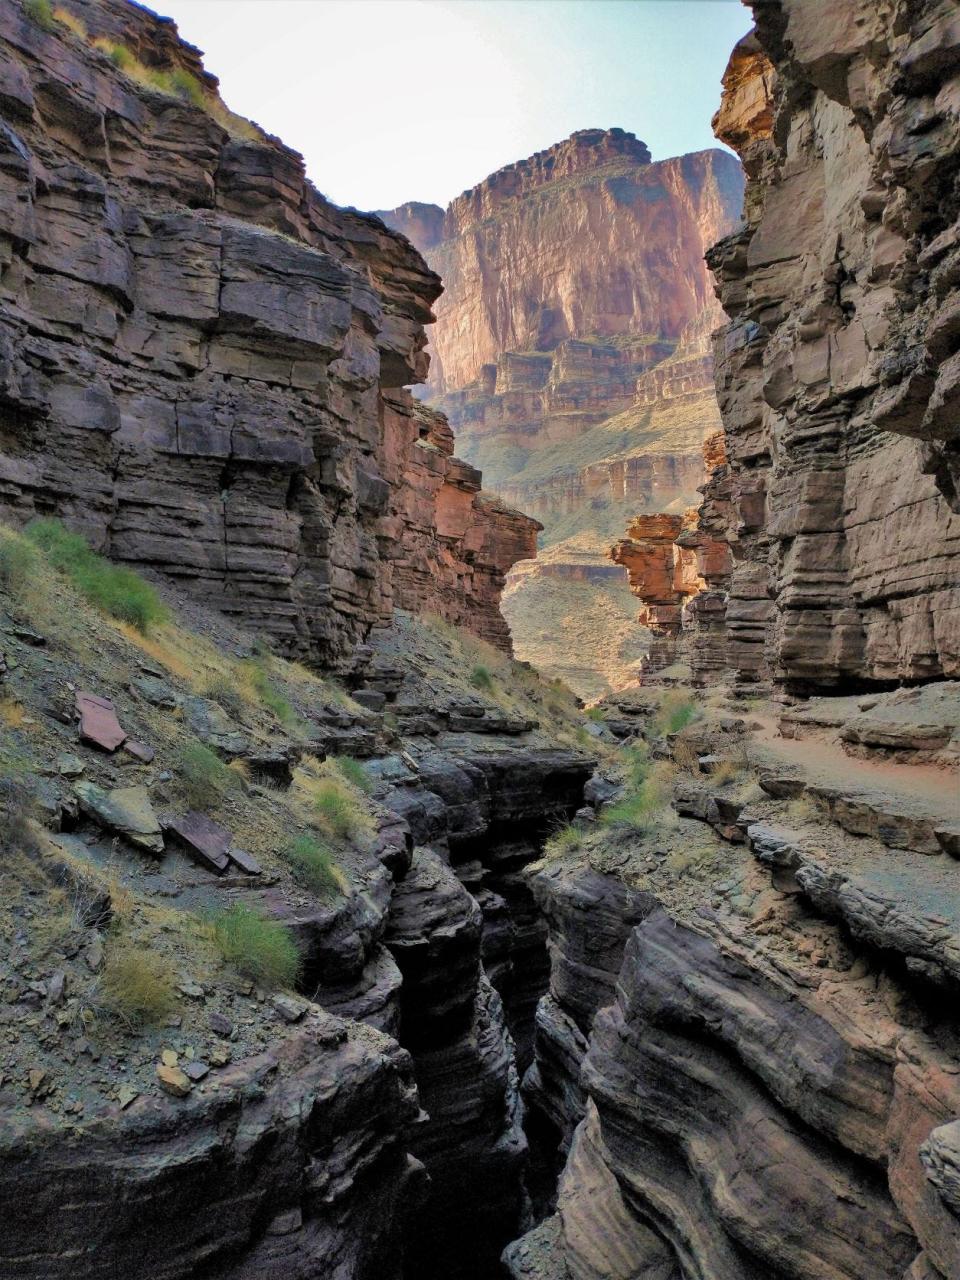 Deer Creek Narrows within Grand Canyon National Park.